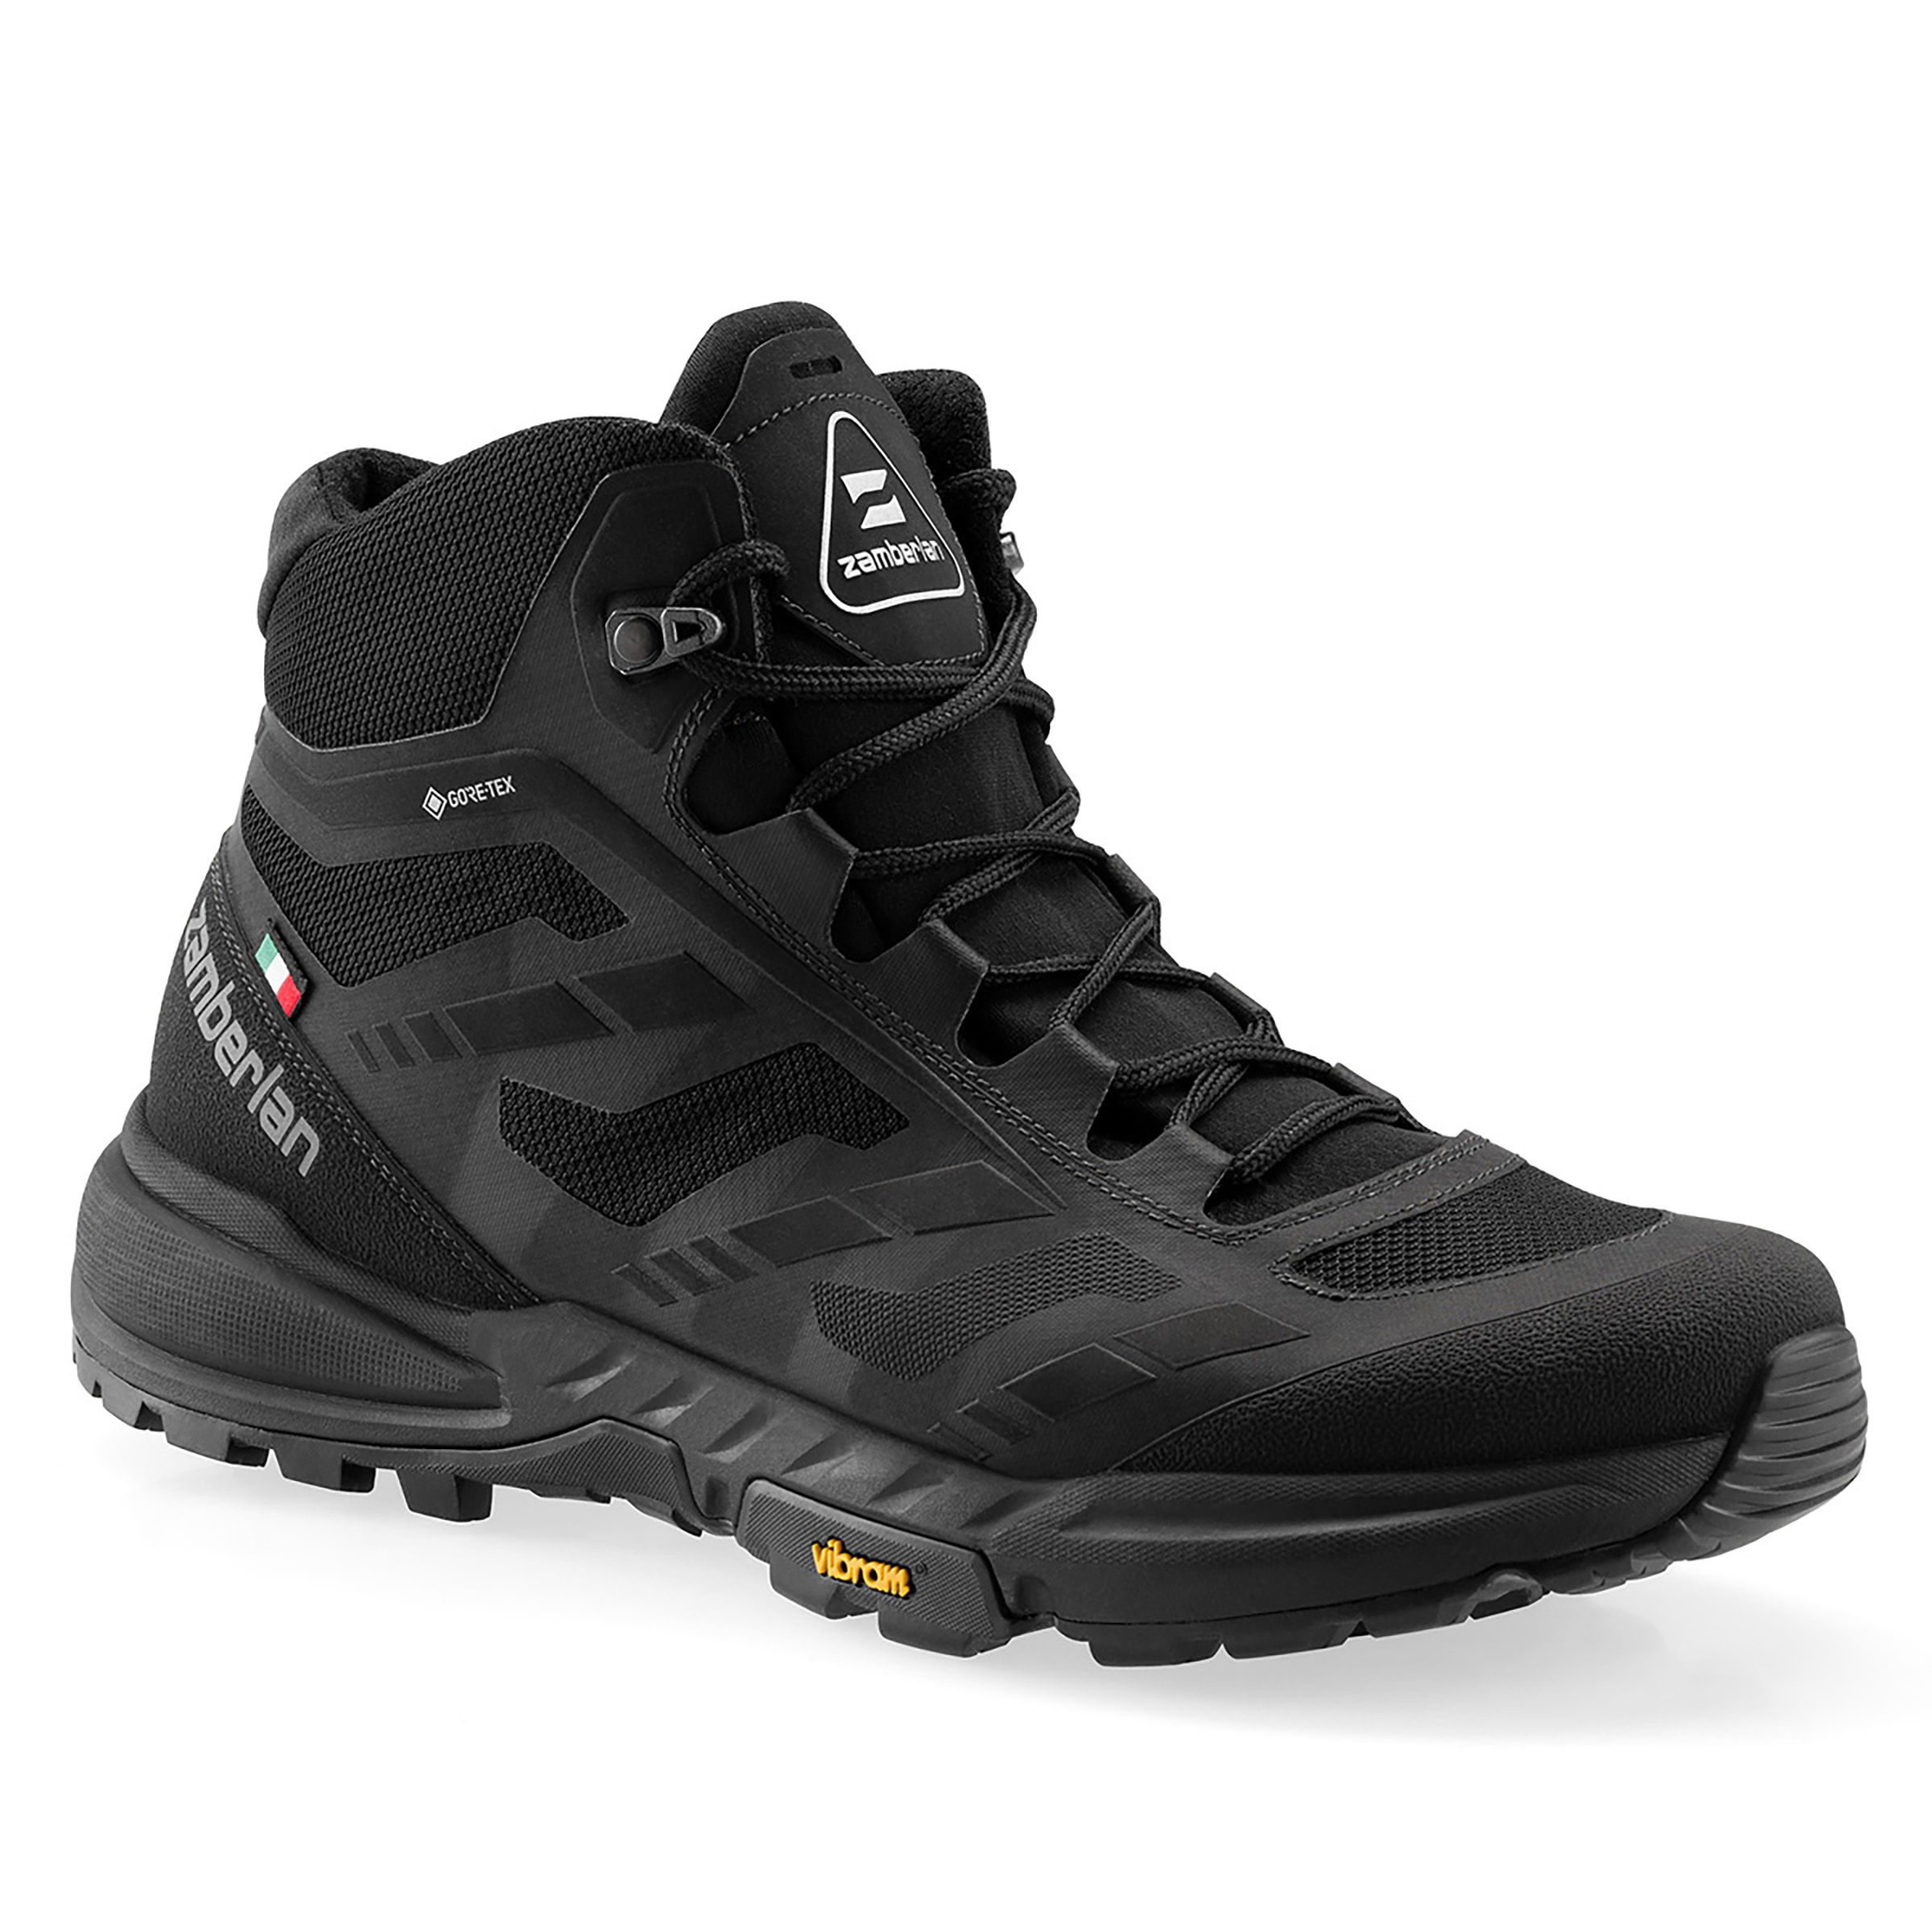 Zamberlan 219 Anabasis GTX Waterproof Mid Hiking Boots for Men - Black - 12M